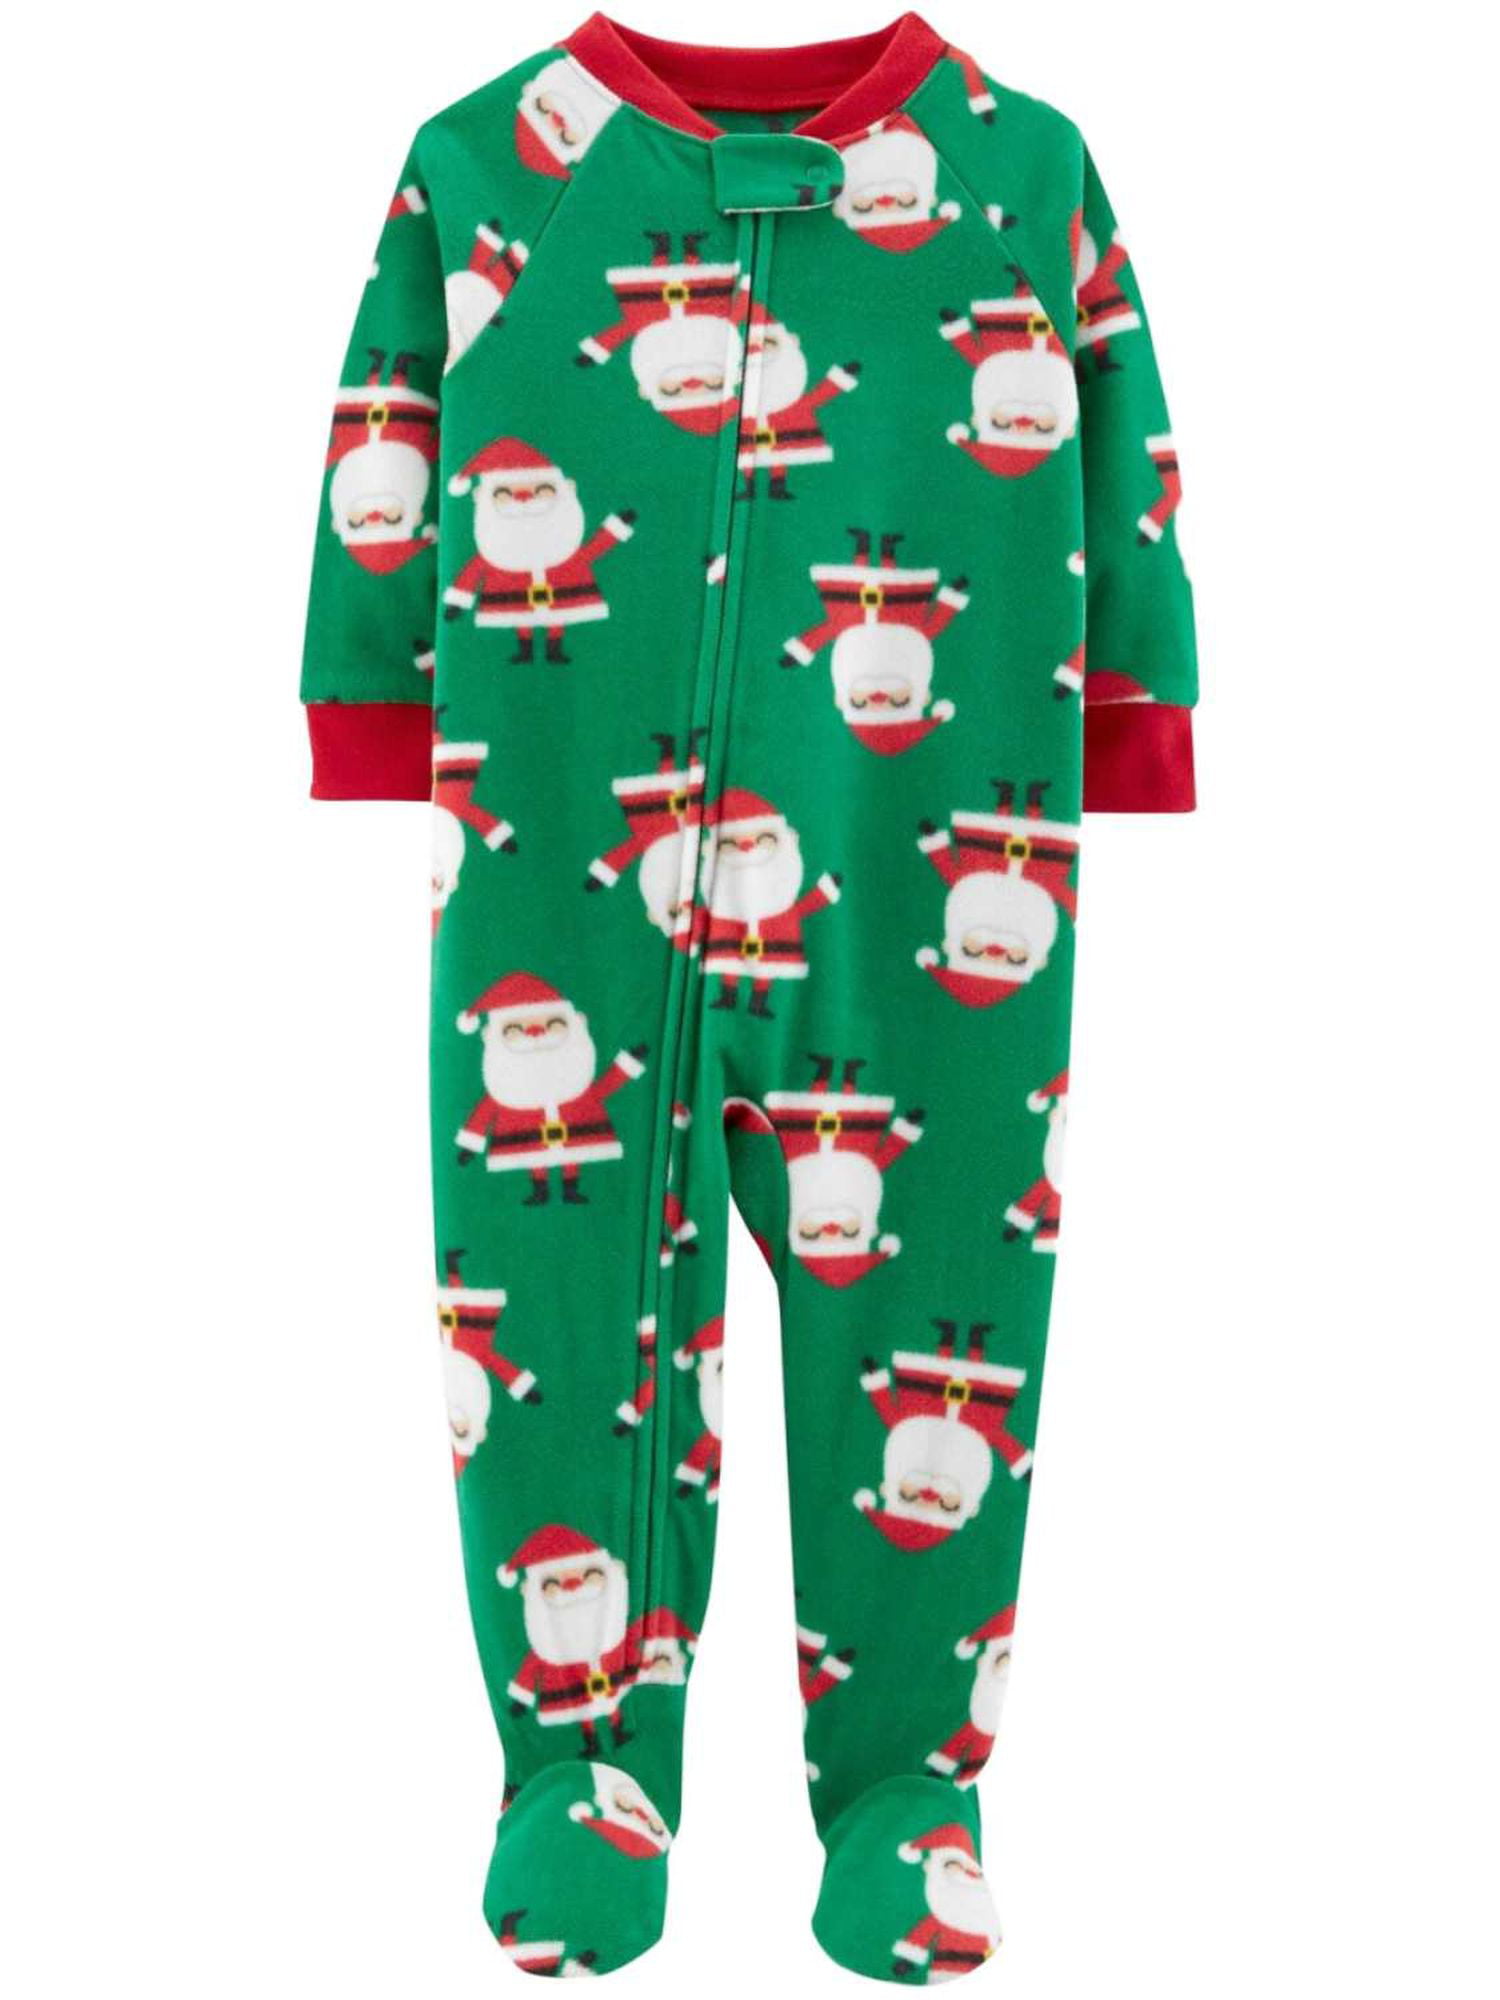 Carter's Carters Infant Boys Green Waving Santa Christmas Holiday Footie Sleeper Pajamas